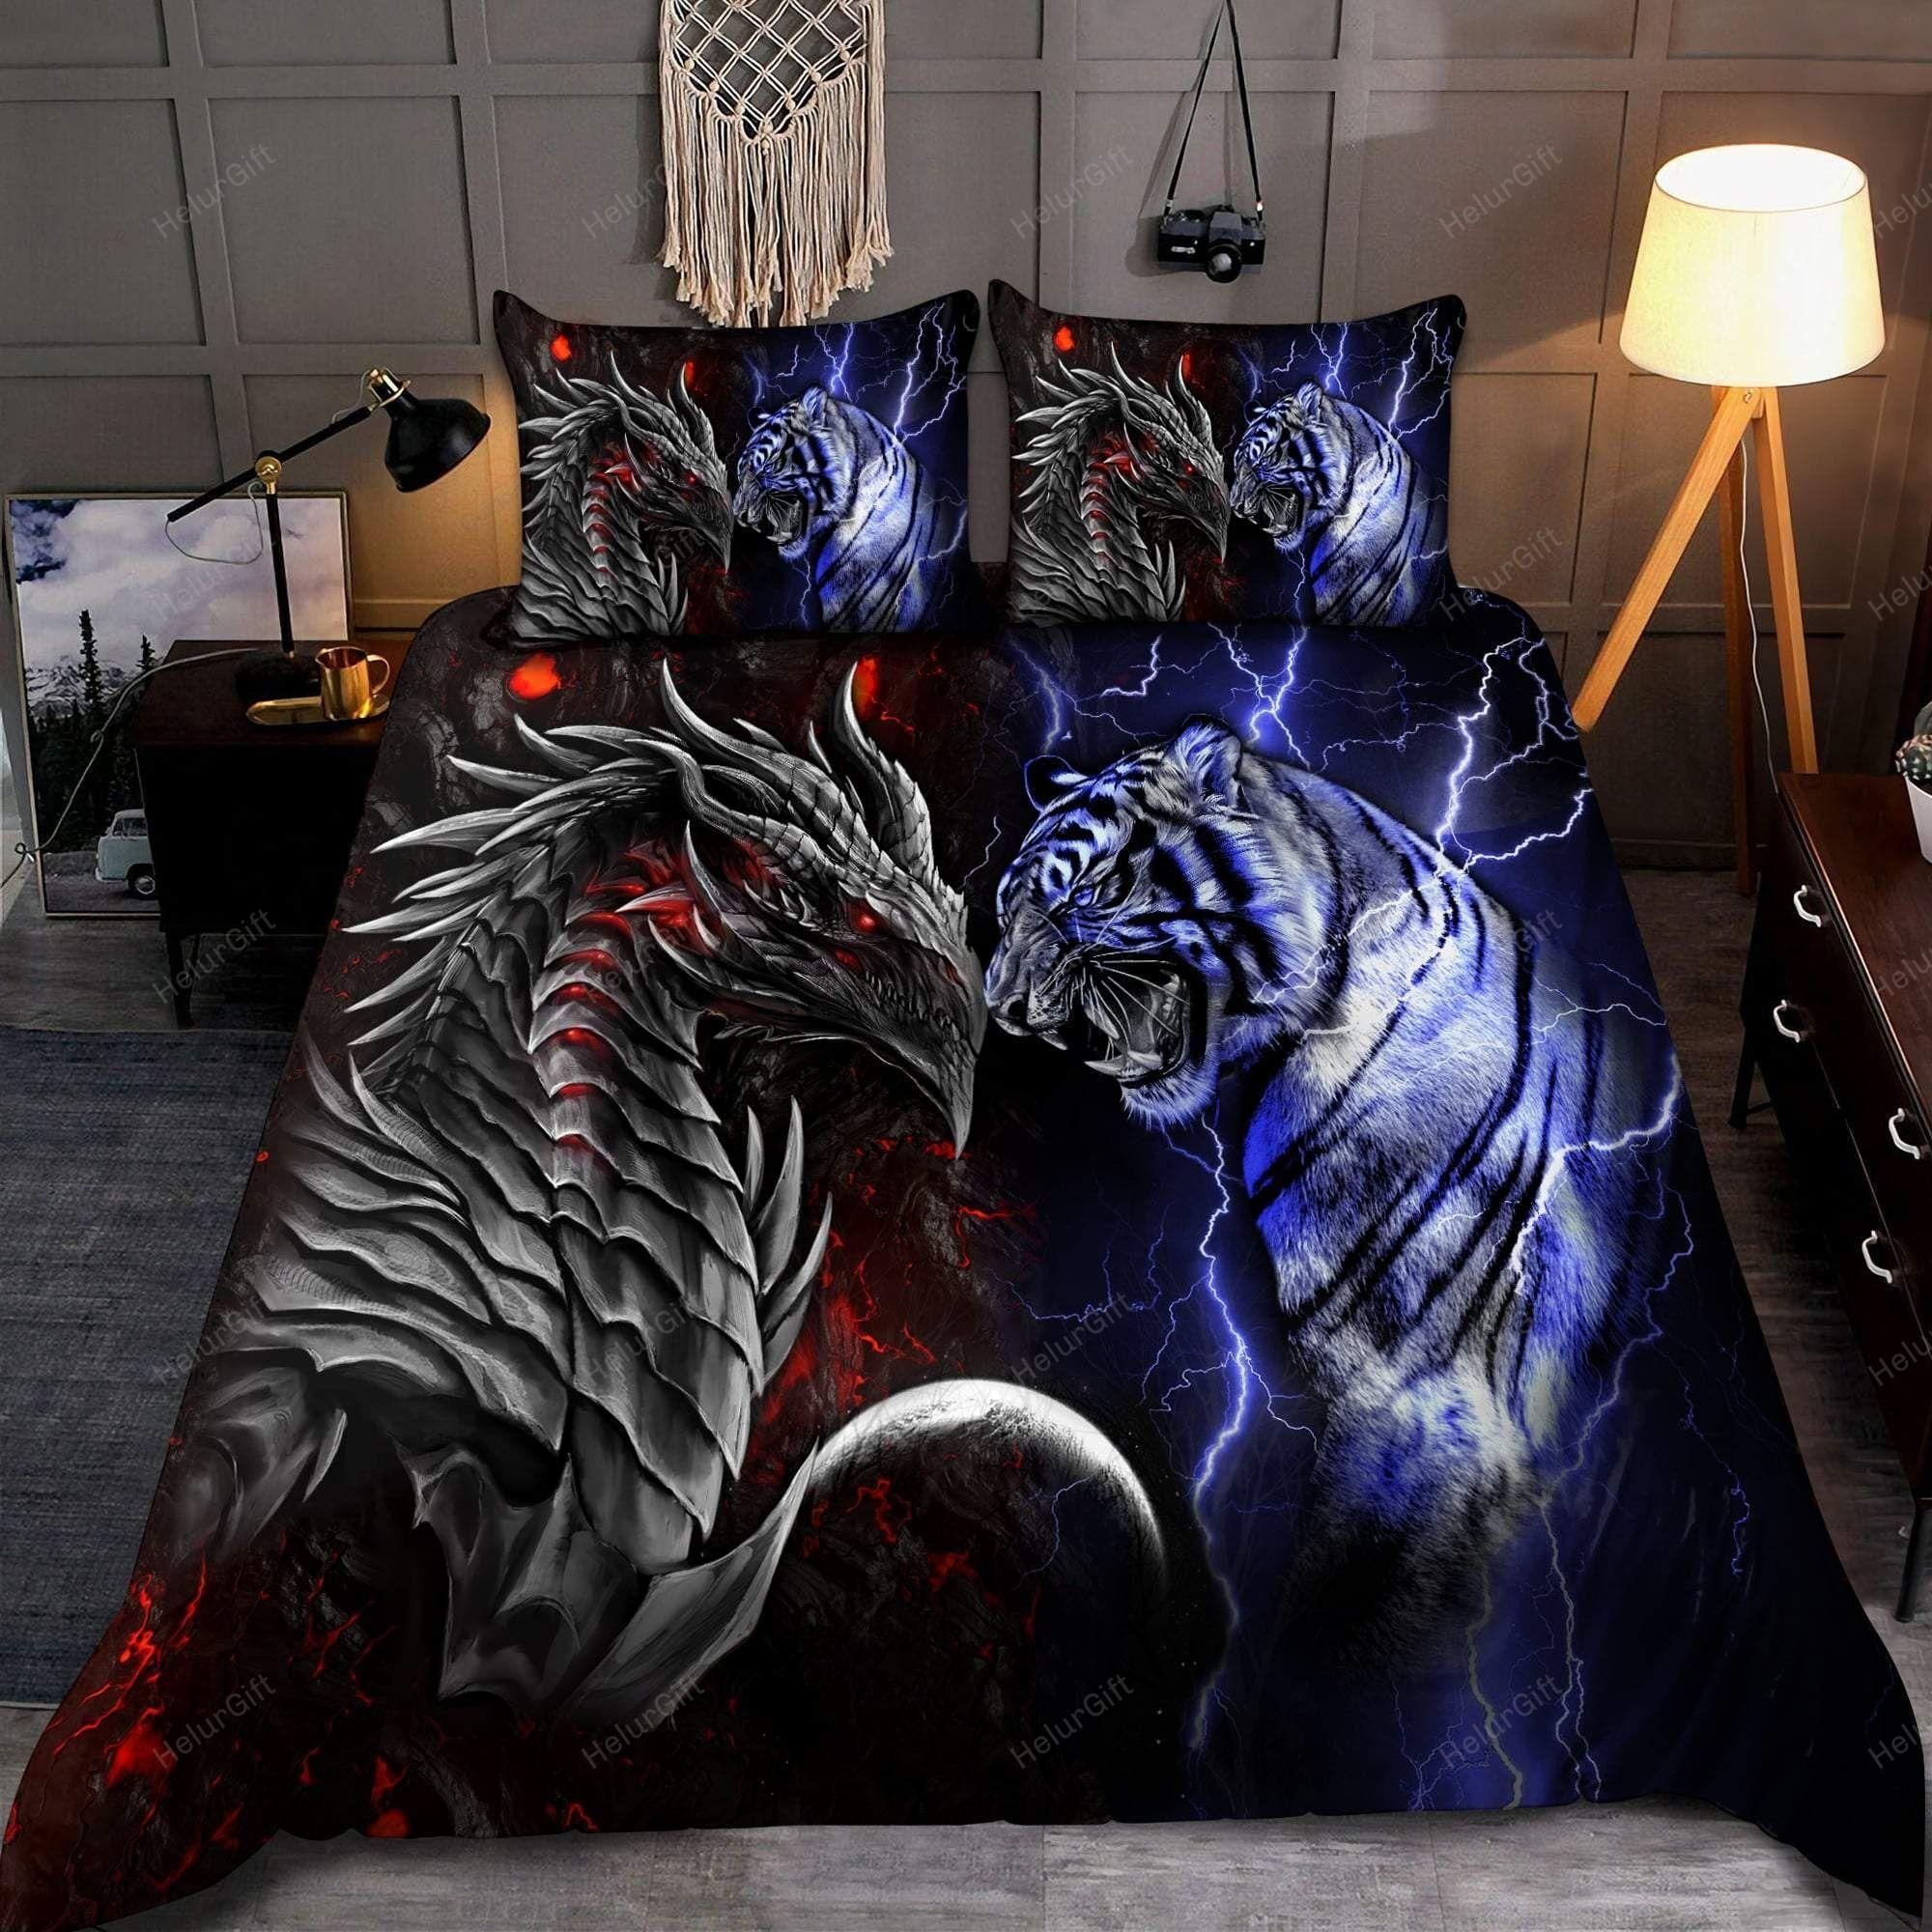 Dragon and tiger bedding set